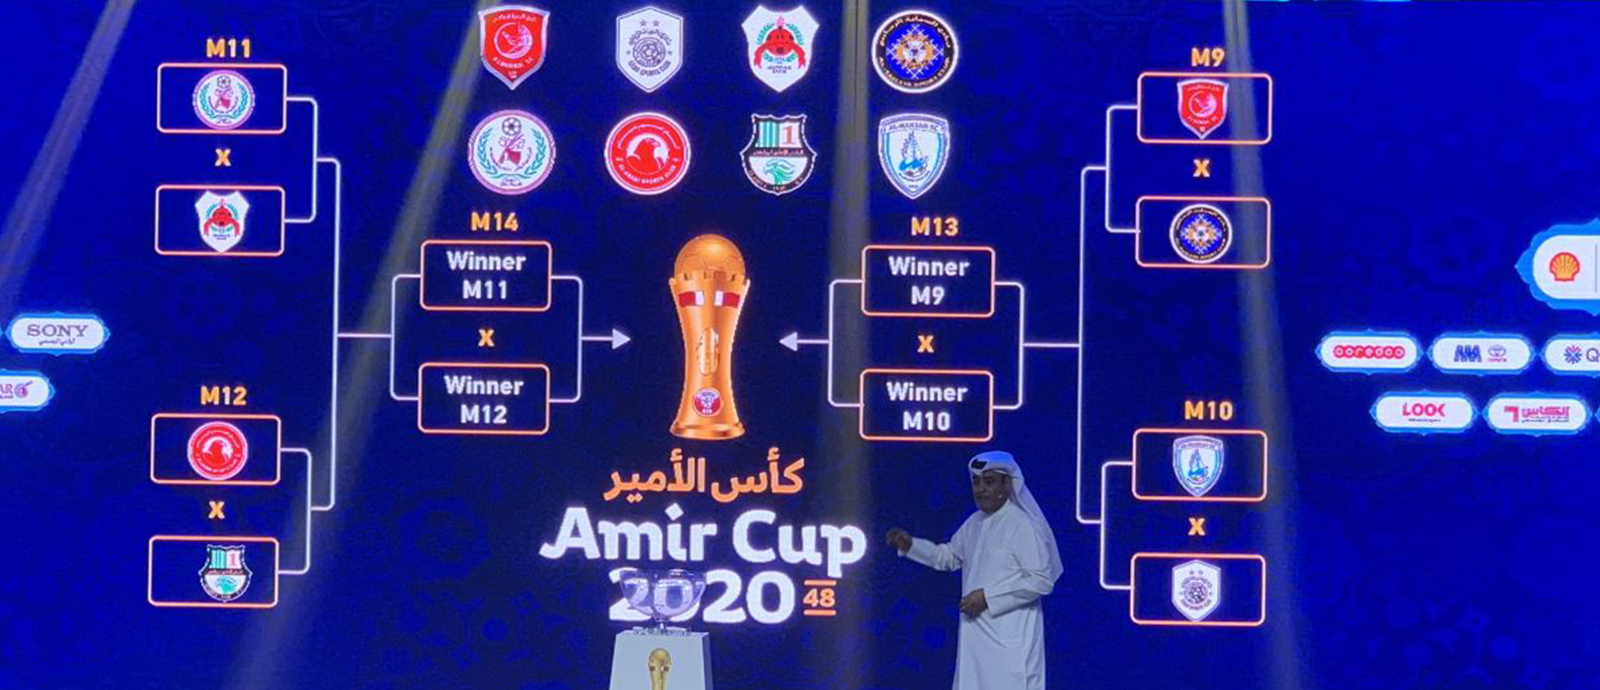 2020 Amir Cup quarterfinals draw